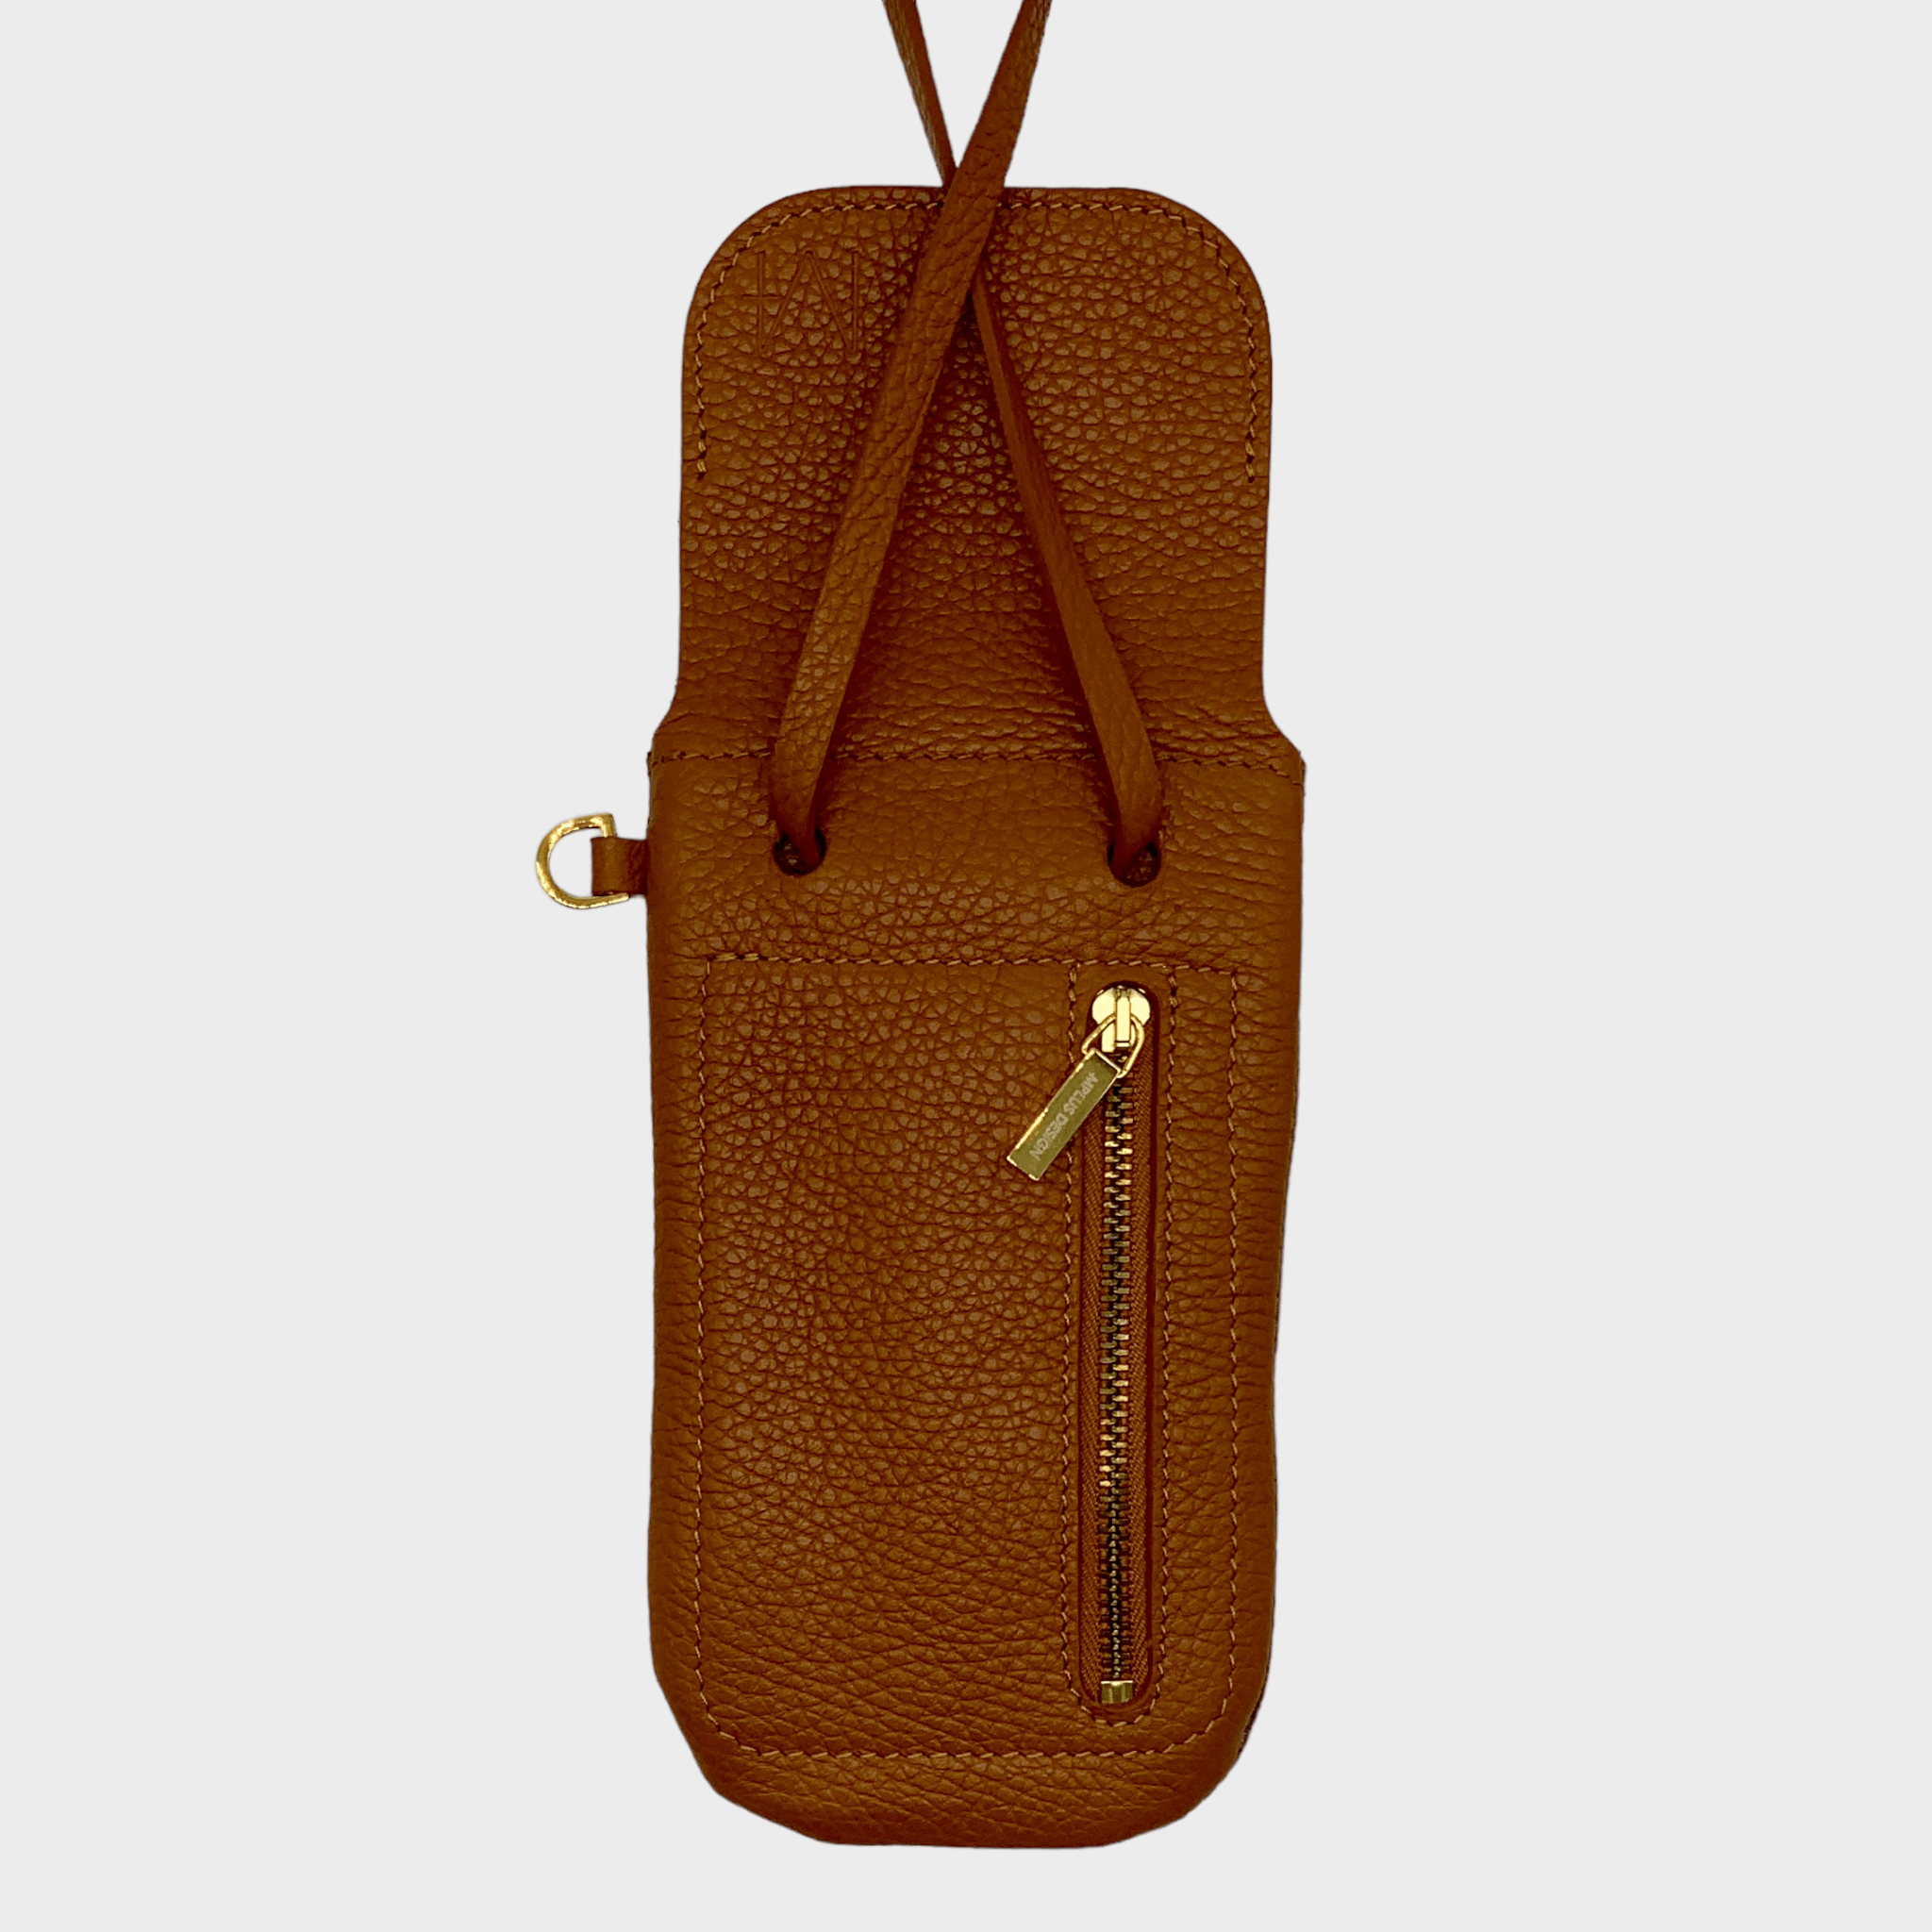 Phone bag 1.2  Mplus Design Echt Leder Handy Tasche zum umhängen SALE